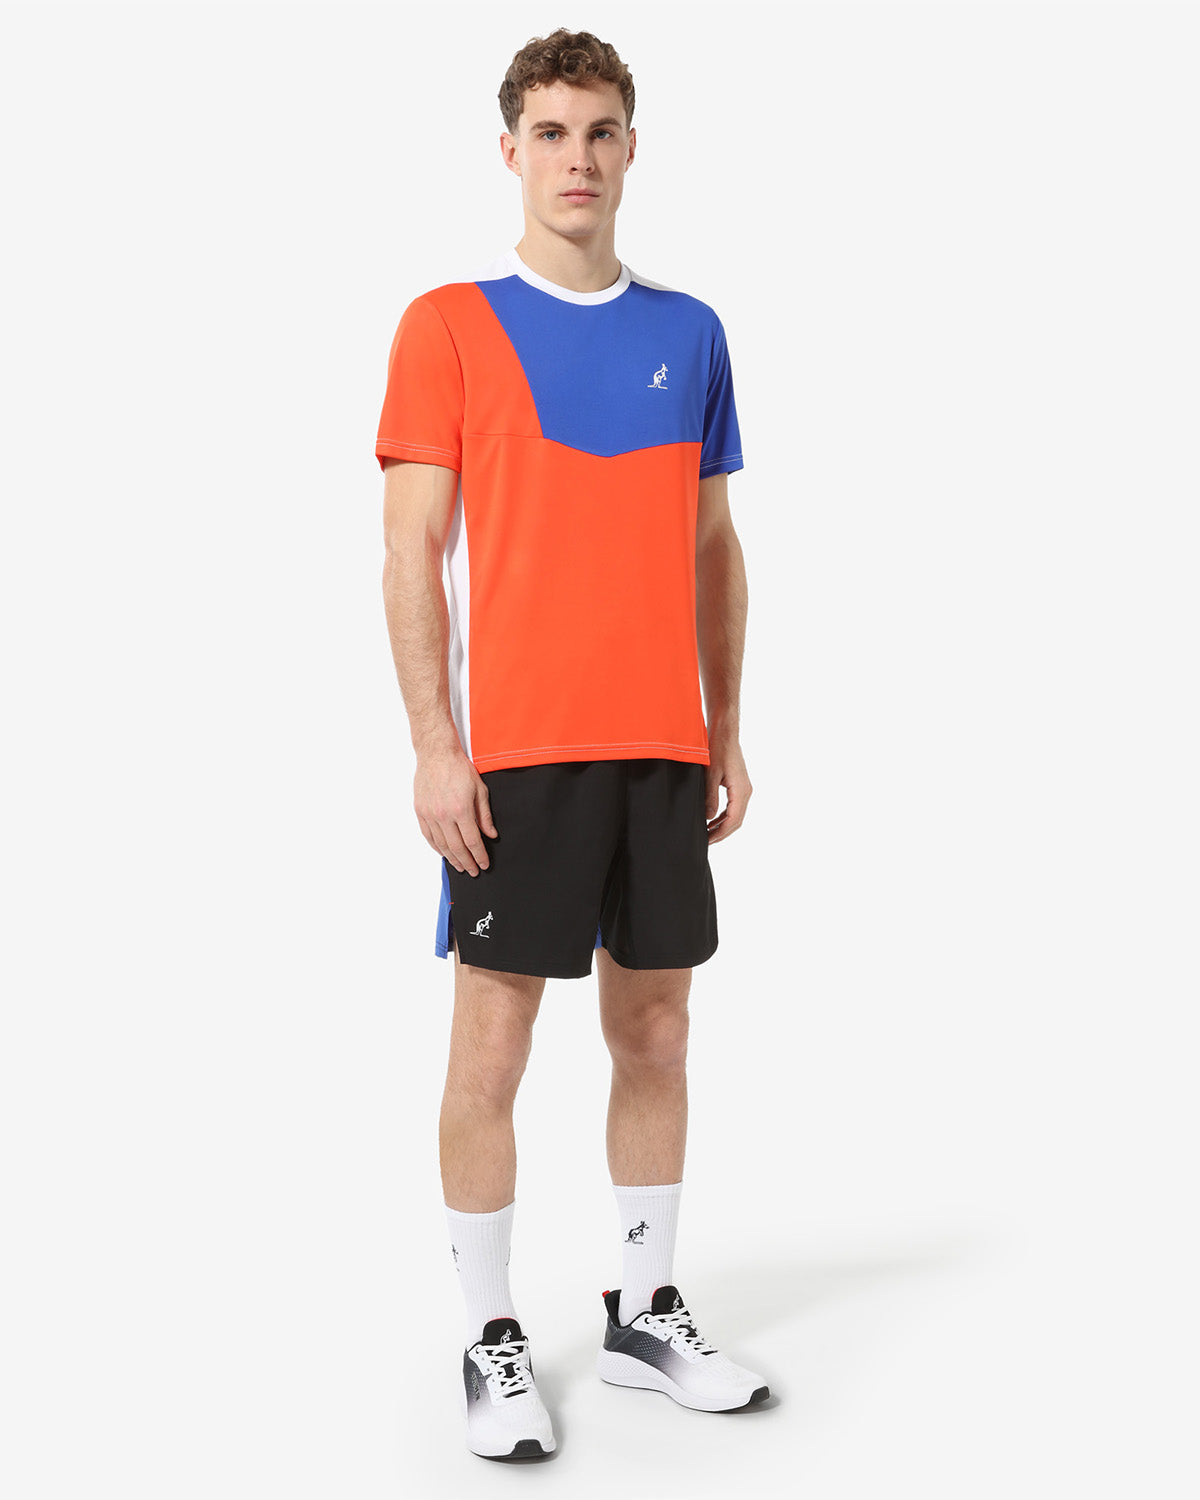 Color Block T-shirt: Australian Tennis